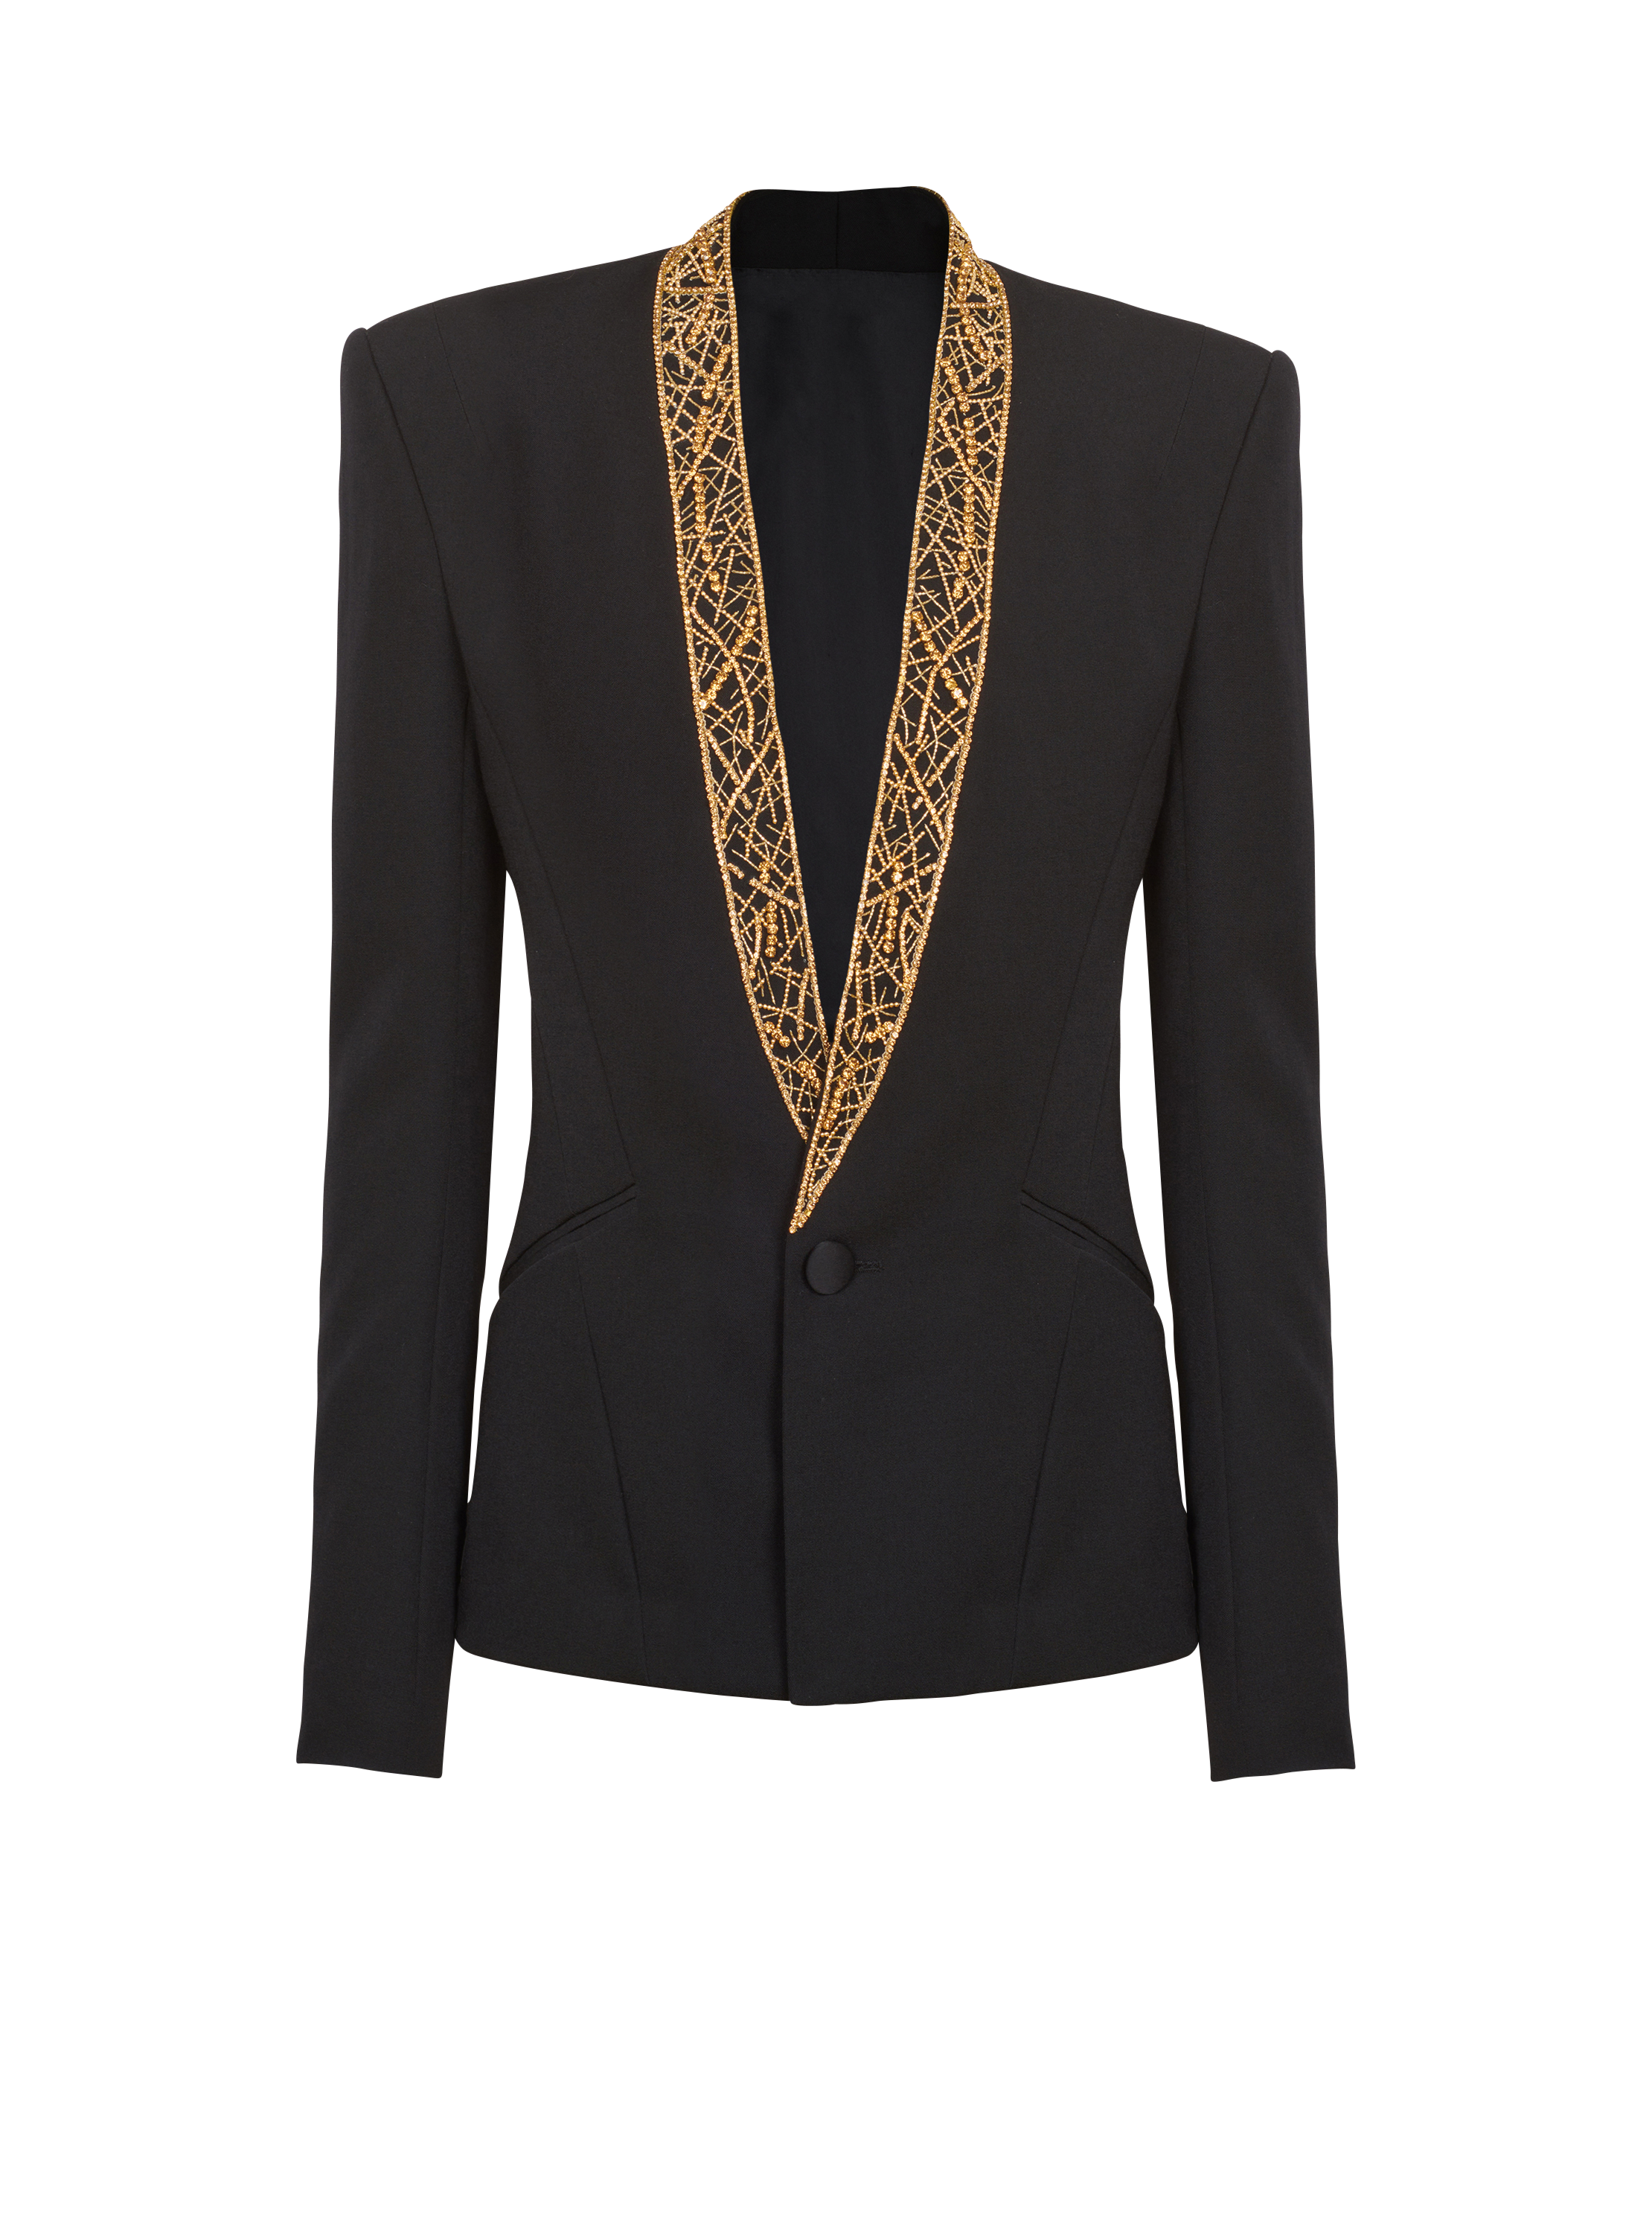 Embroidered collarless jacket, black, hi-res